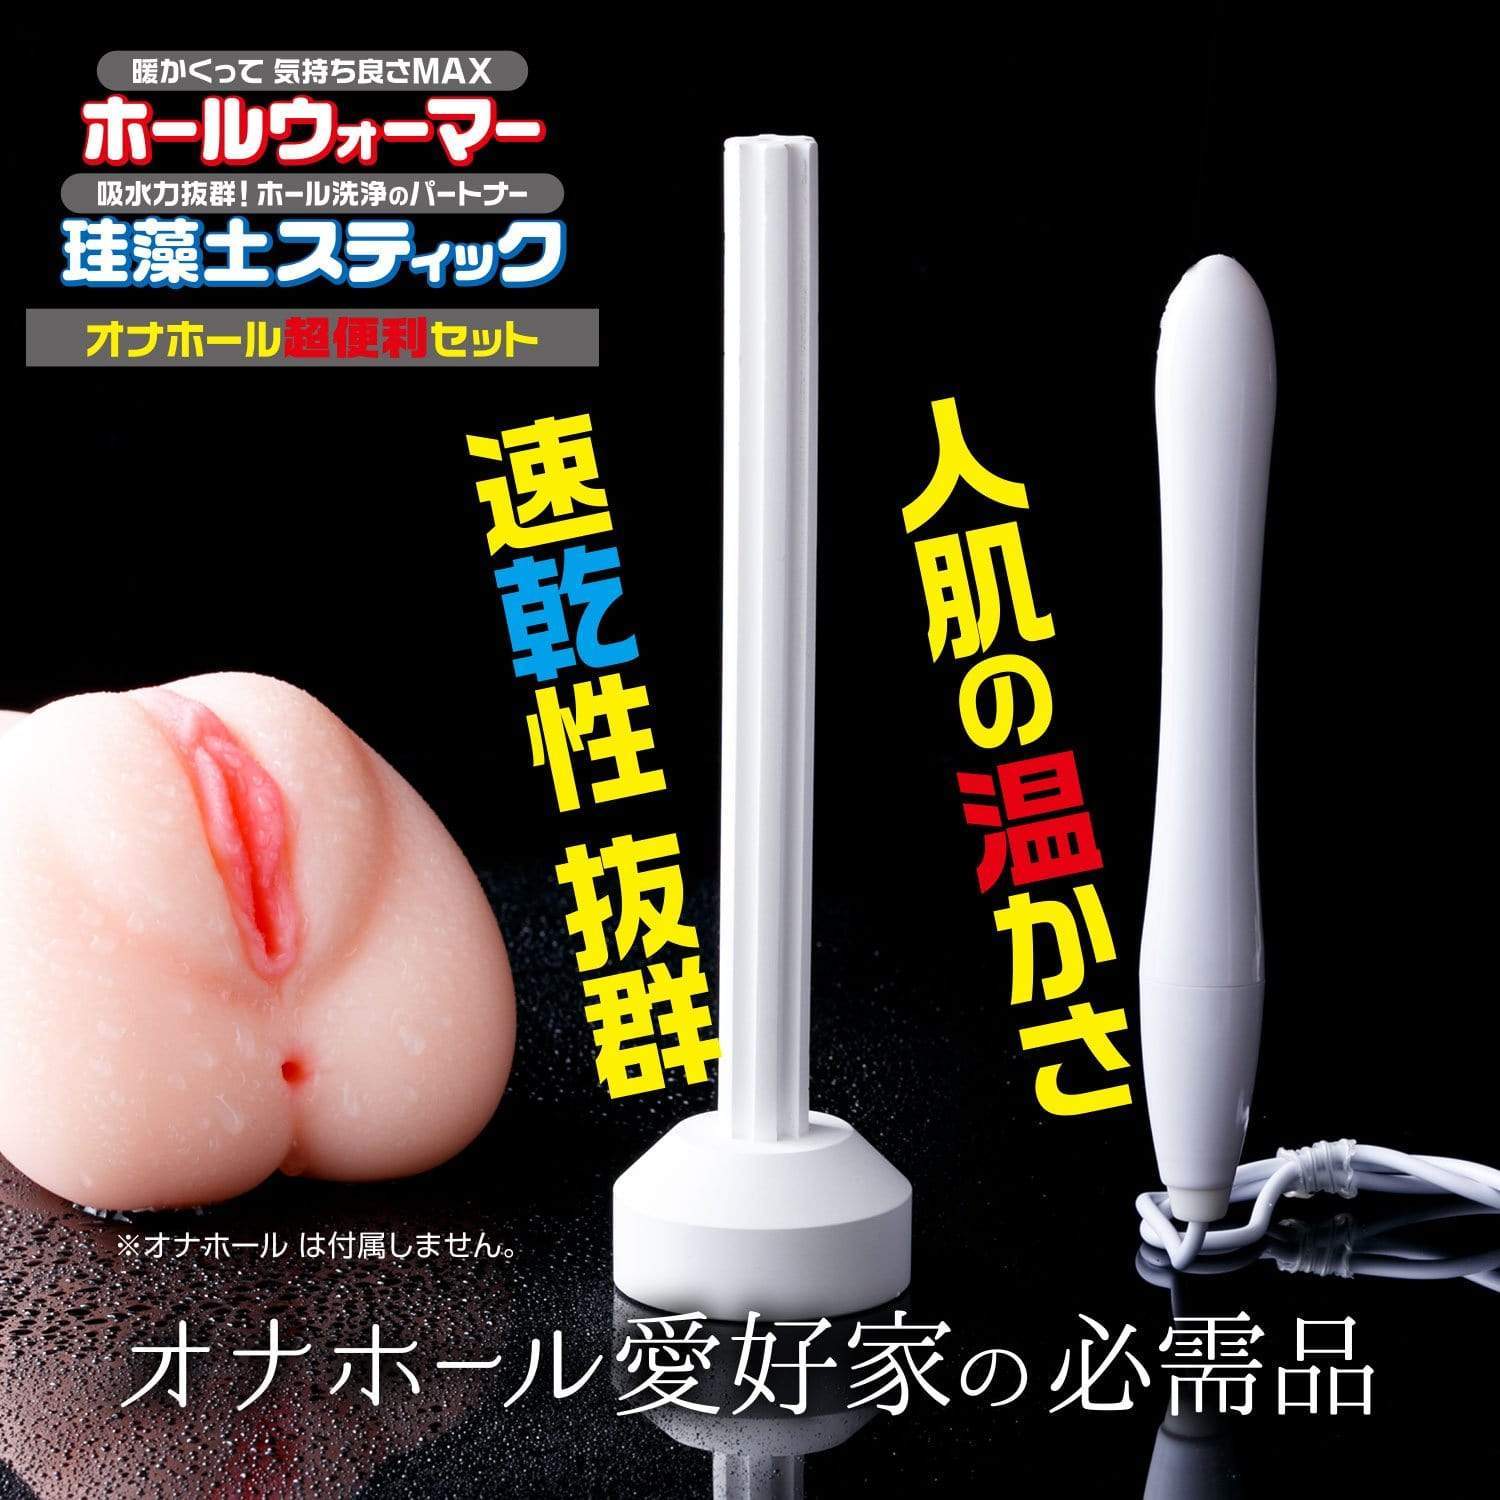 Fuji World - Onahoru Hole Warmer and Keisoudo Drying Stick Set (White) Warmer 277759864 CherryAffairs